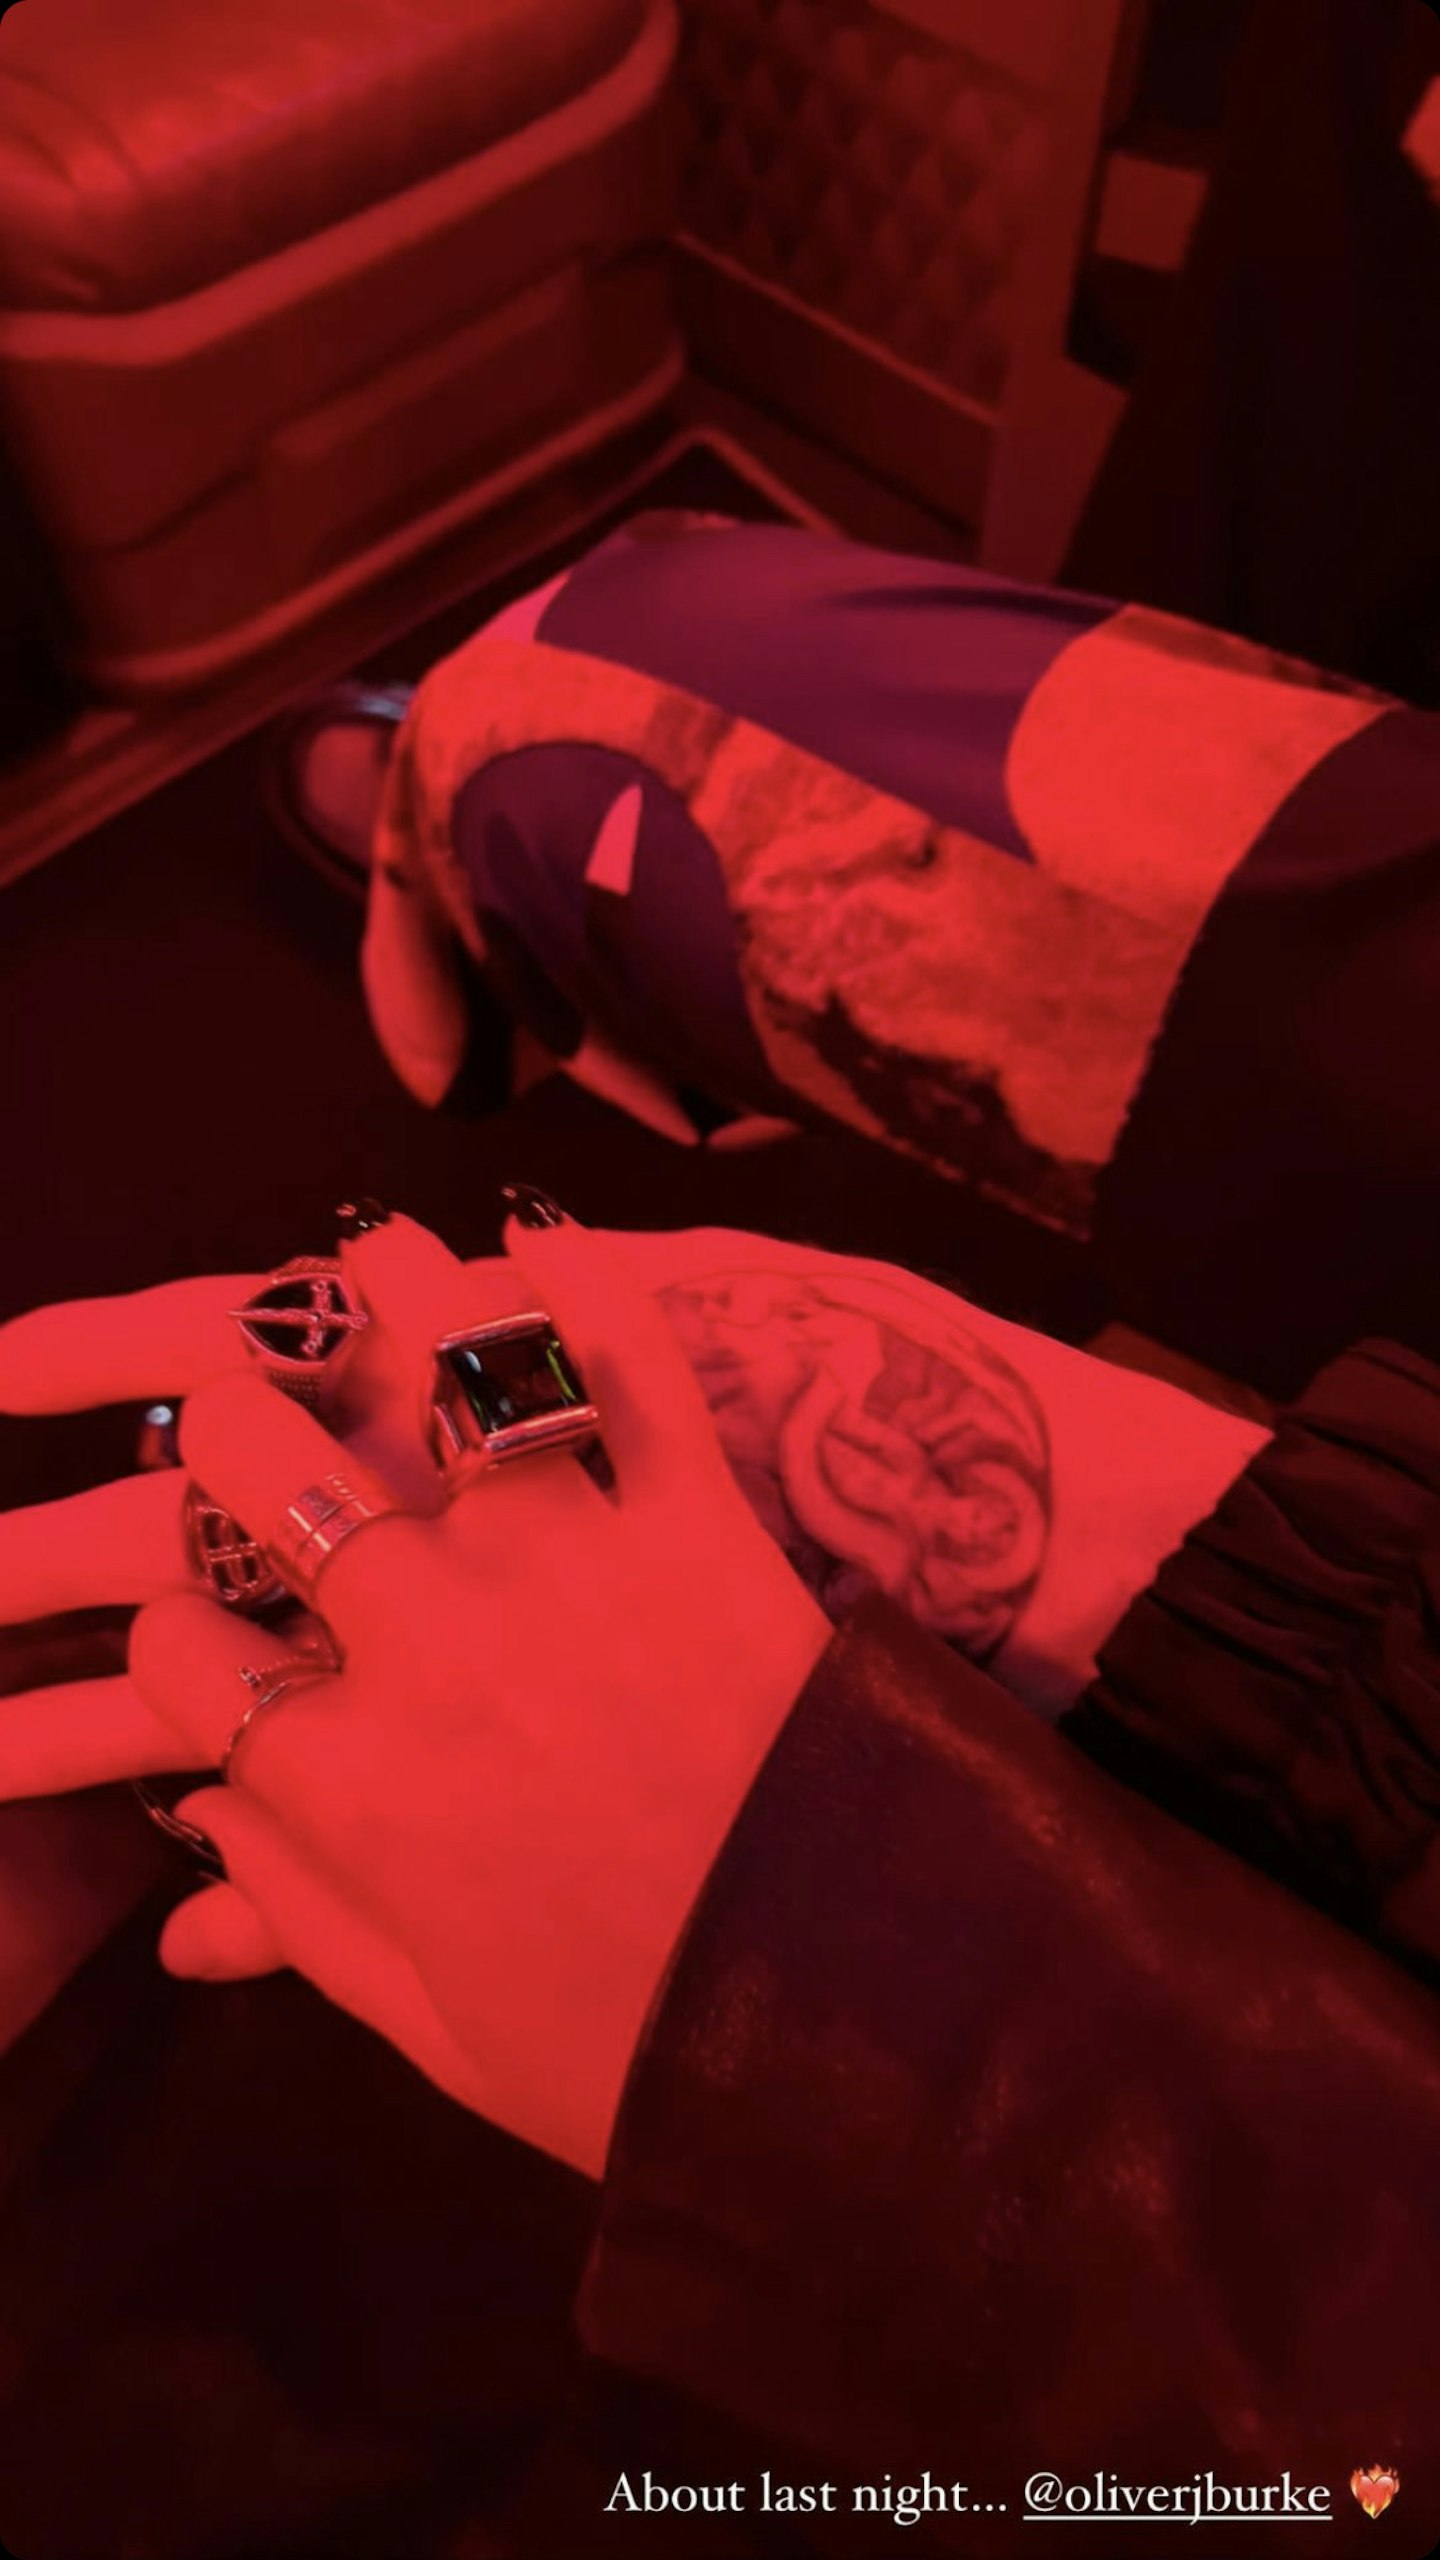 Megan Mckenna and her boyfried's hands in red lighting